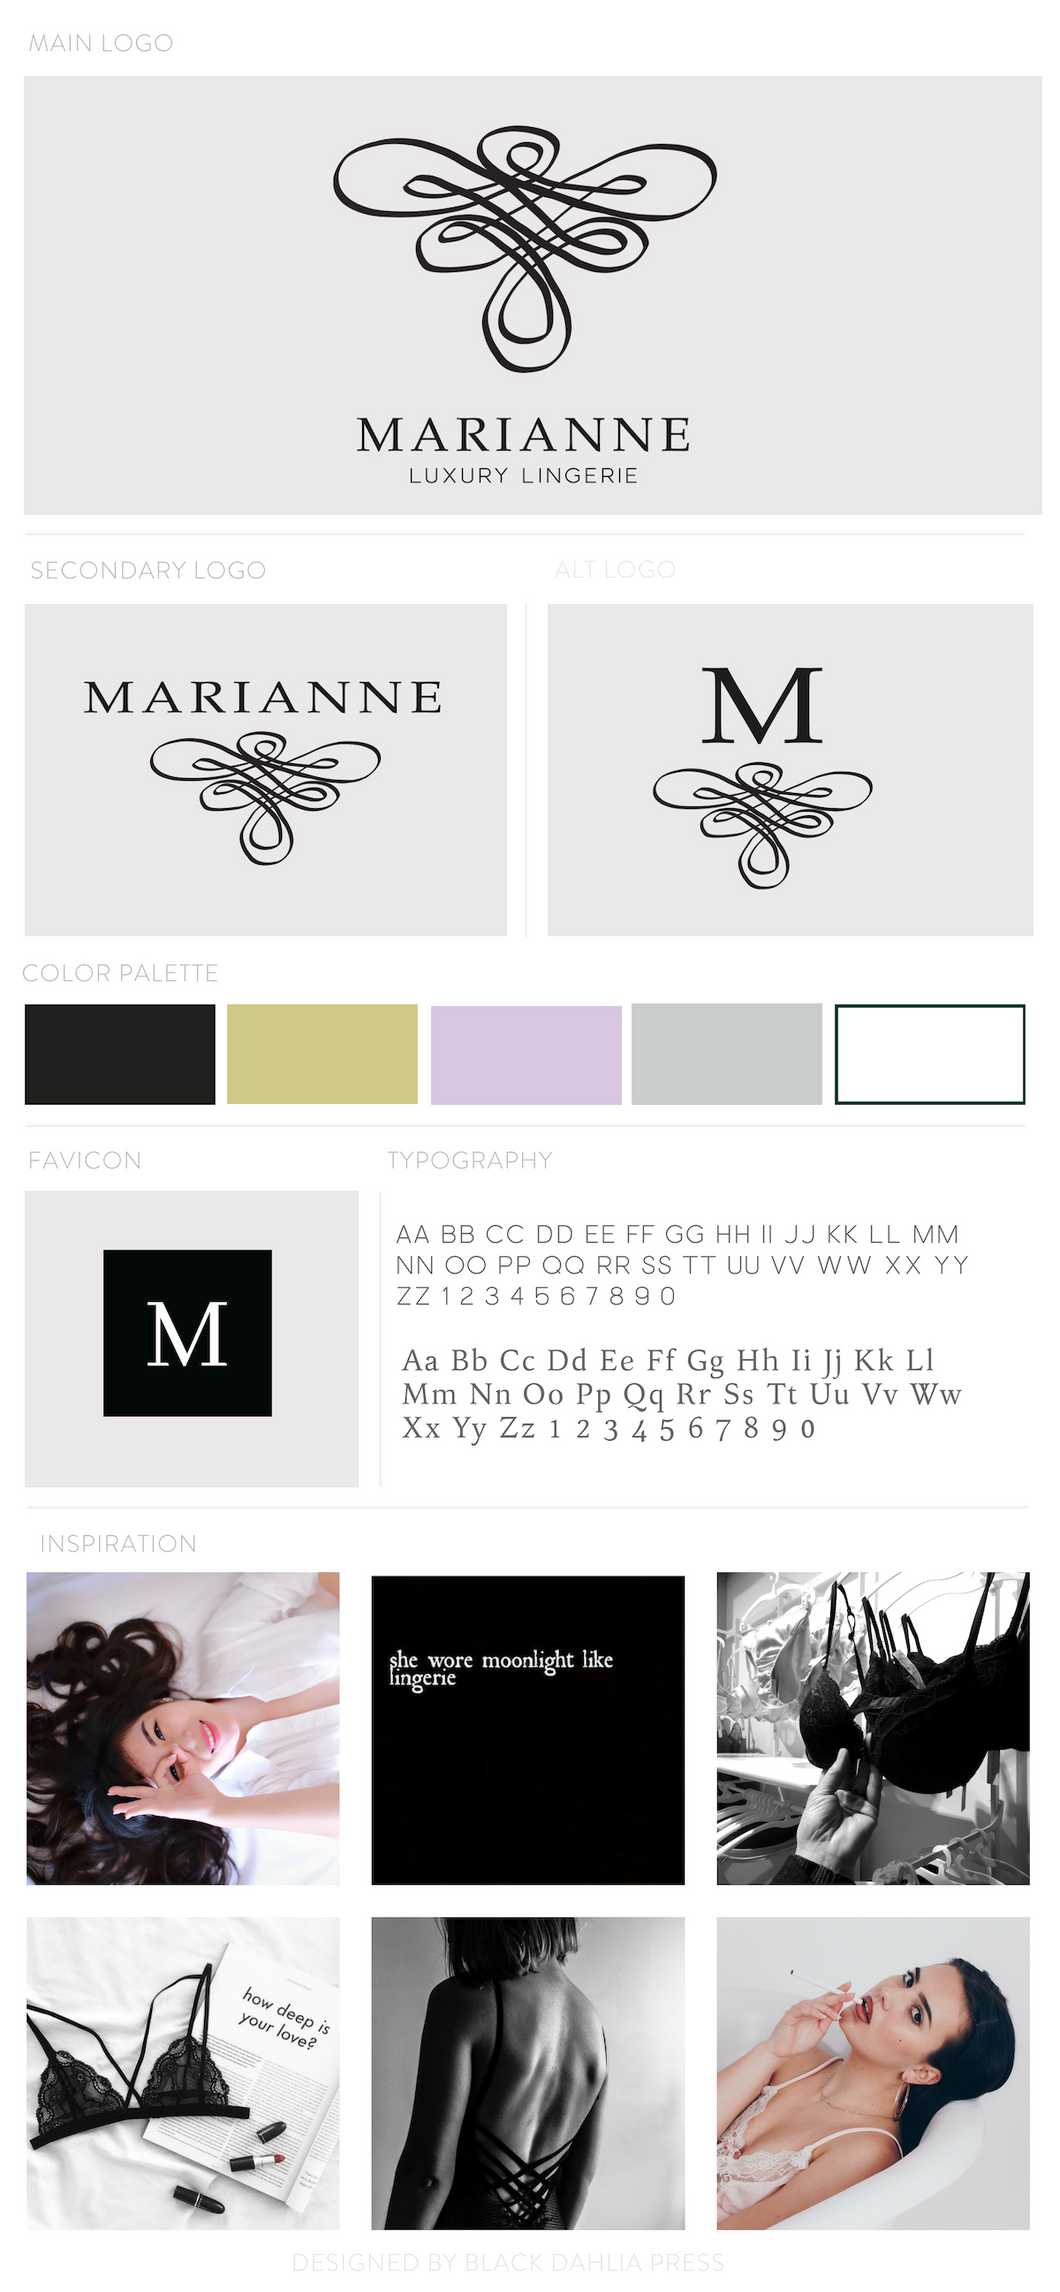 Marianne Pre-made Brand